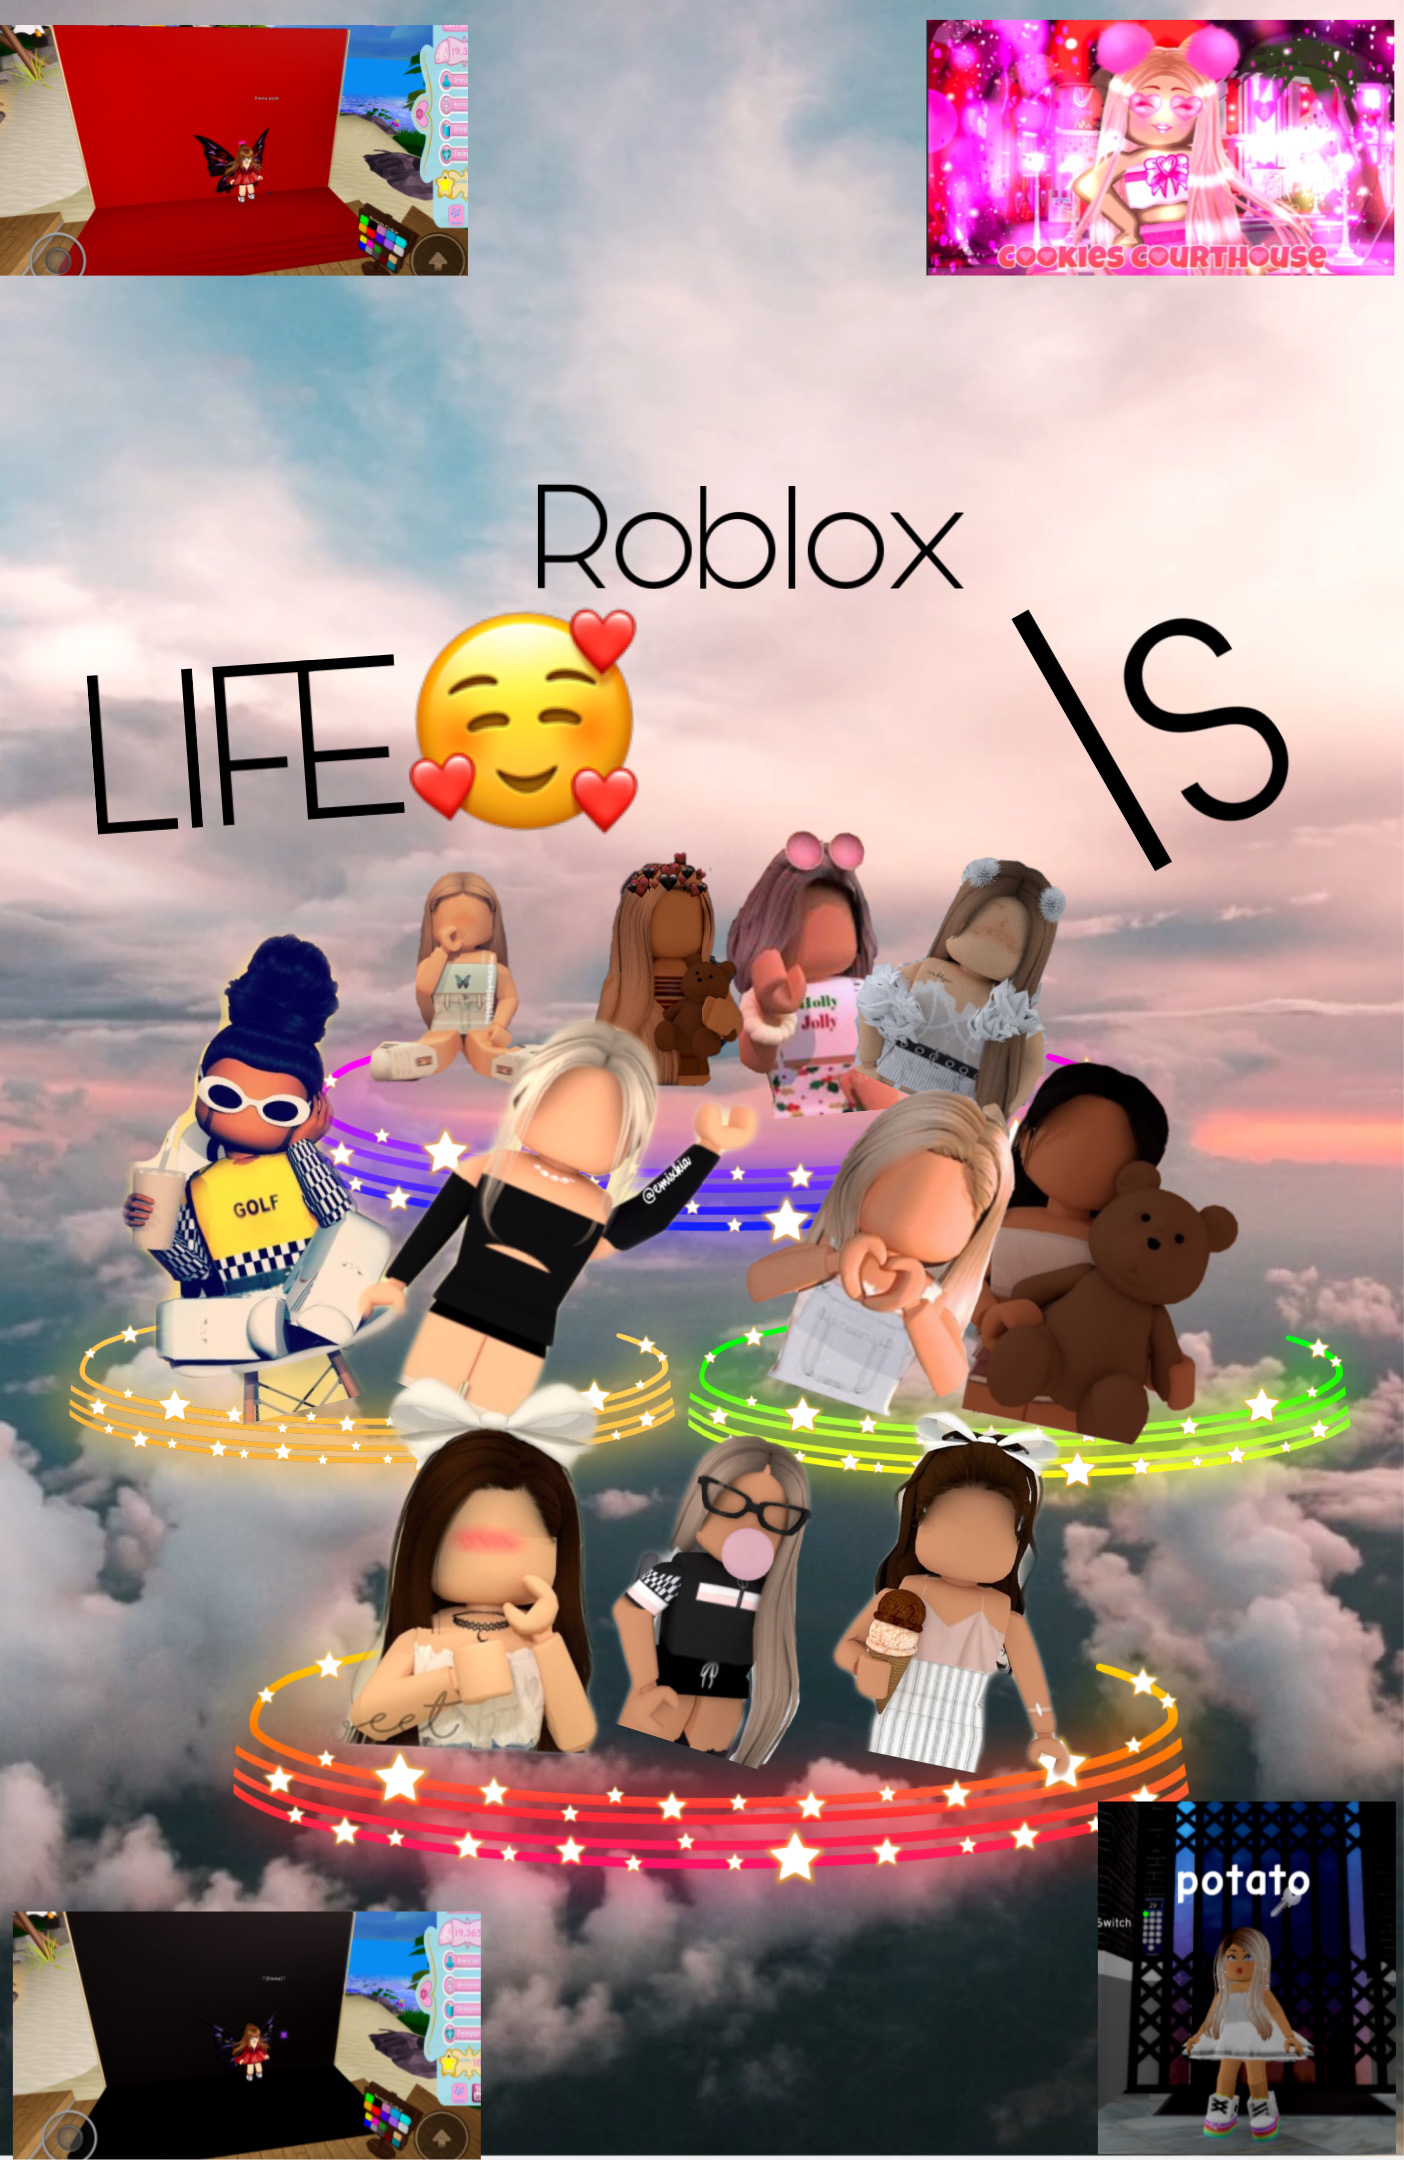 Roblox Image By Ur Local Hottie - robloxbuild instagram photo and video on instagram pikdo